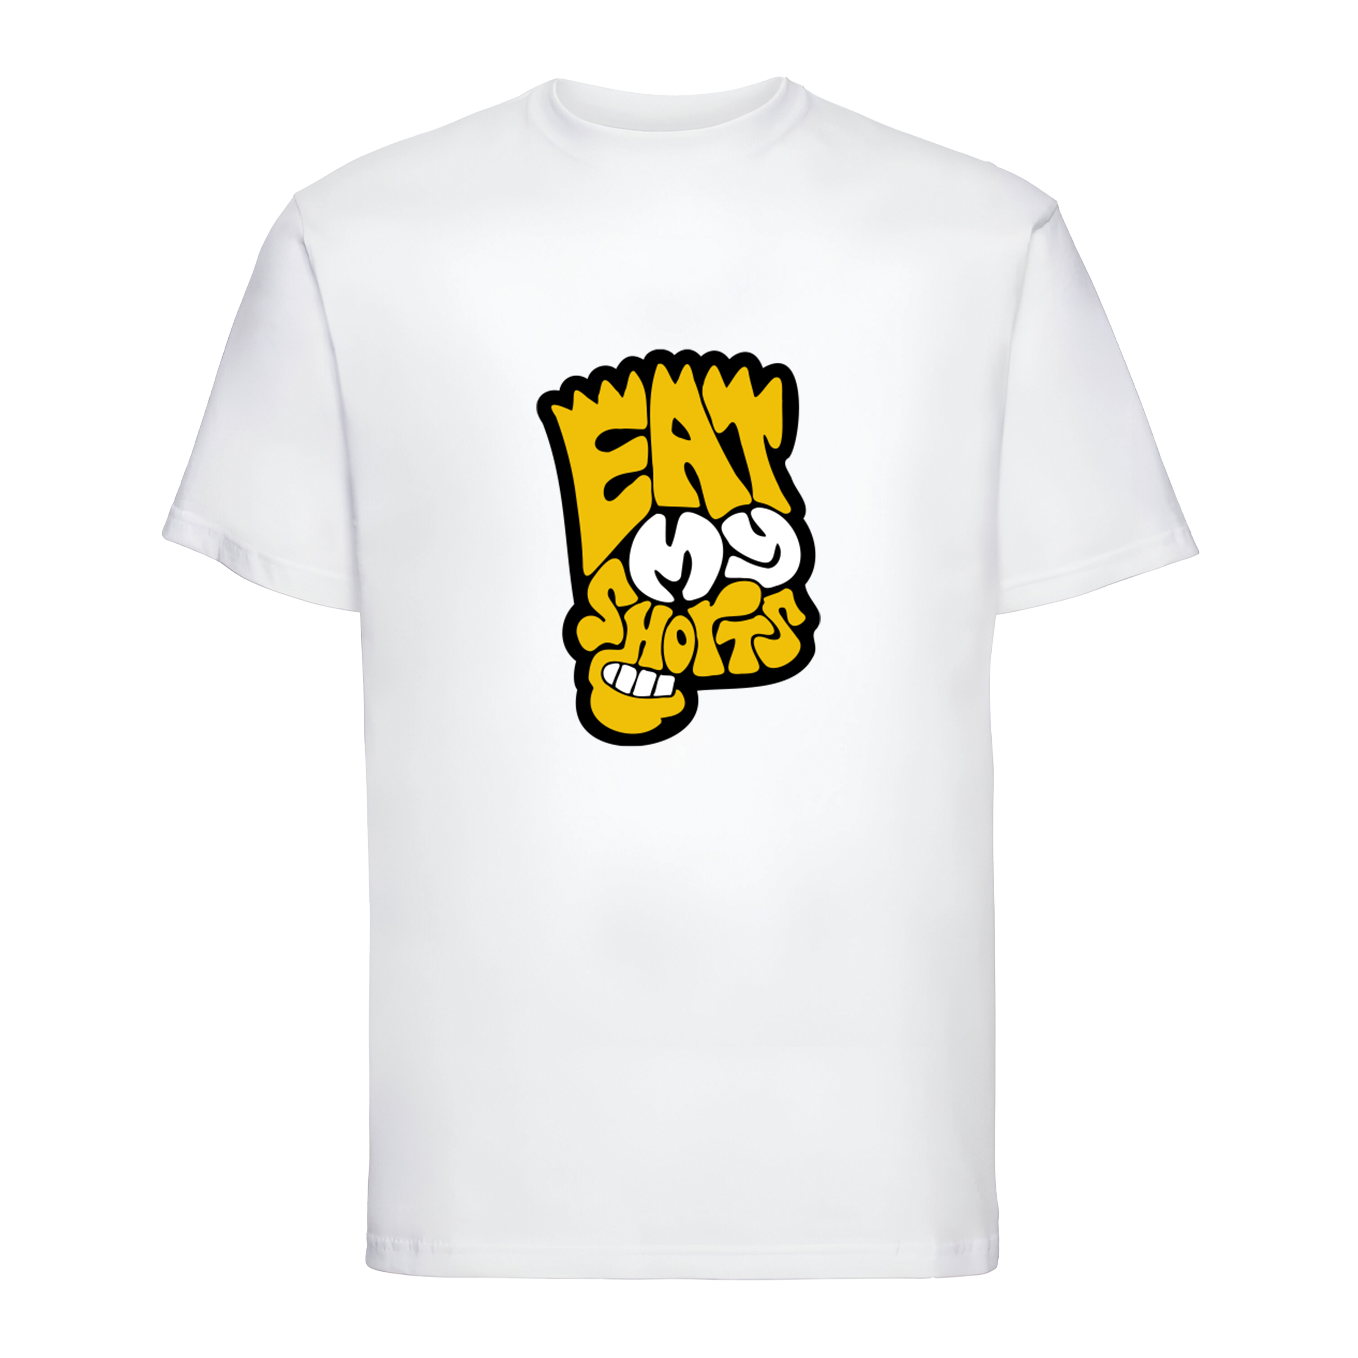 T-shirt "Eat My Shorts"